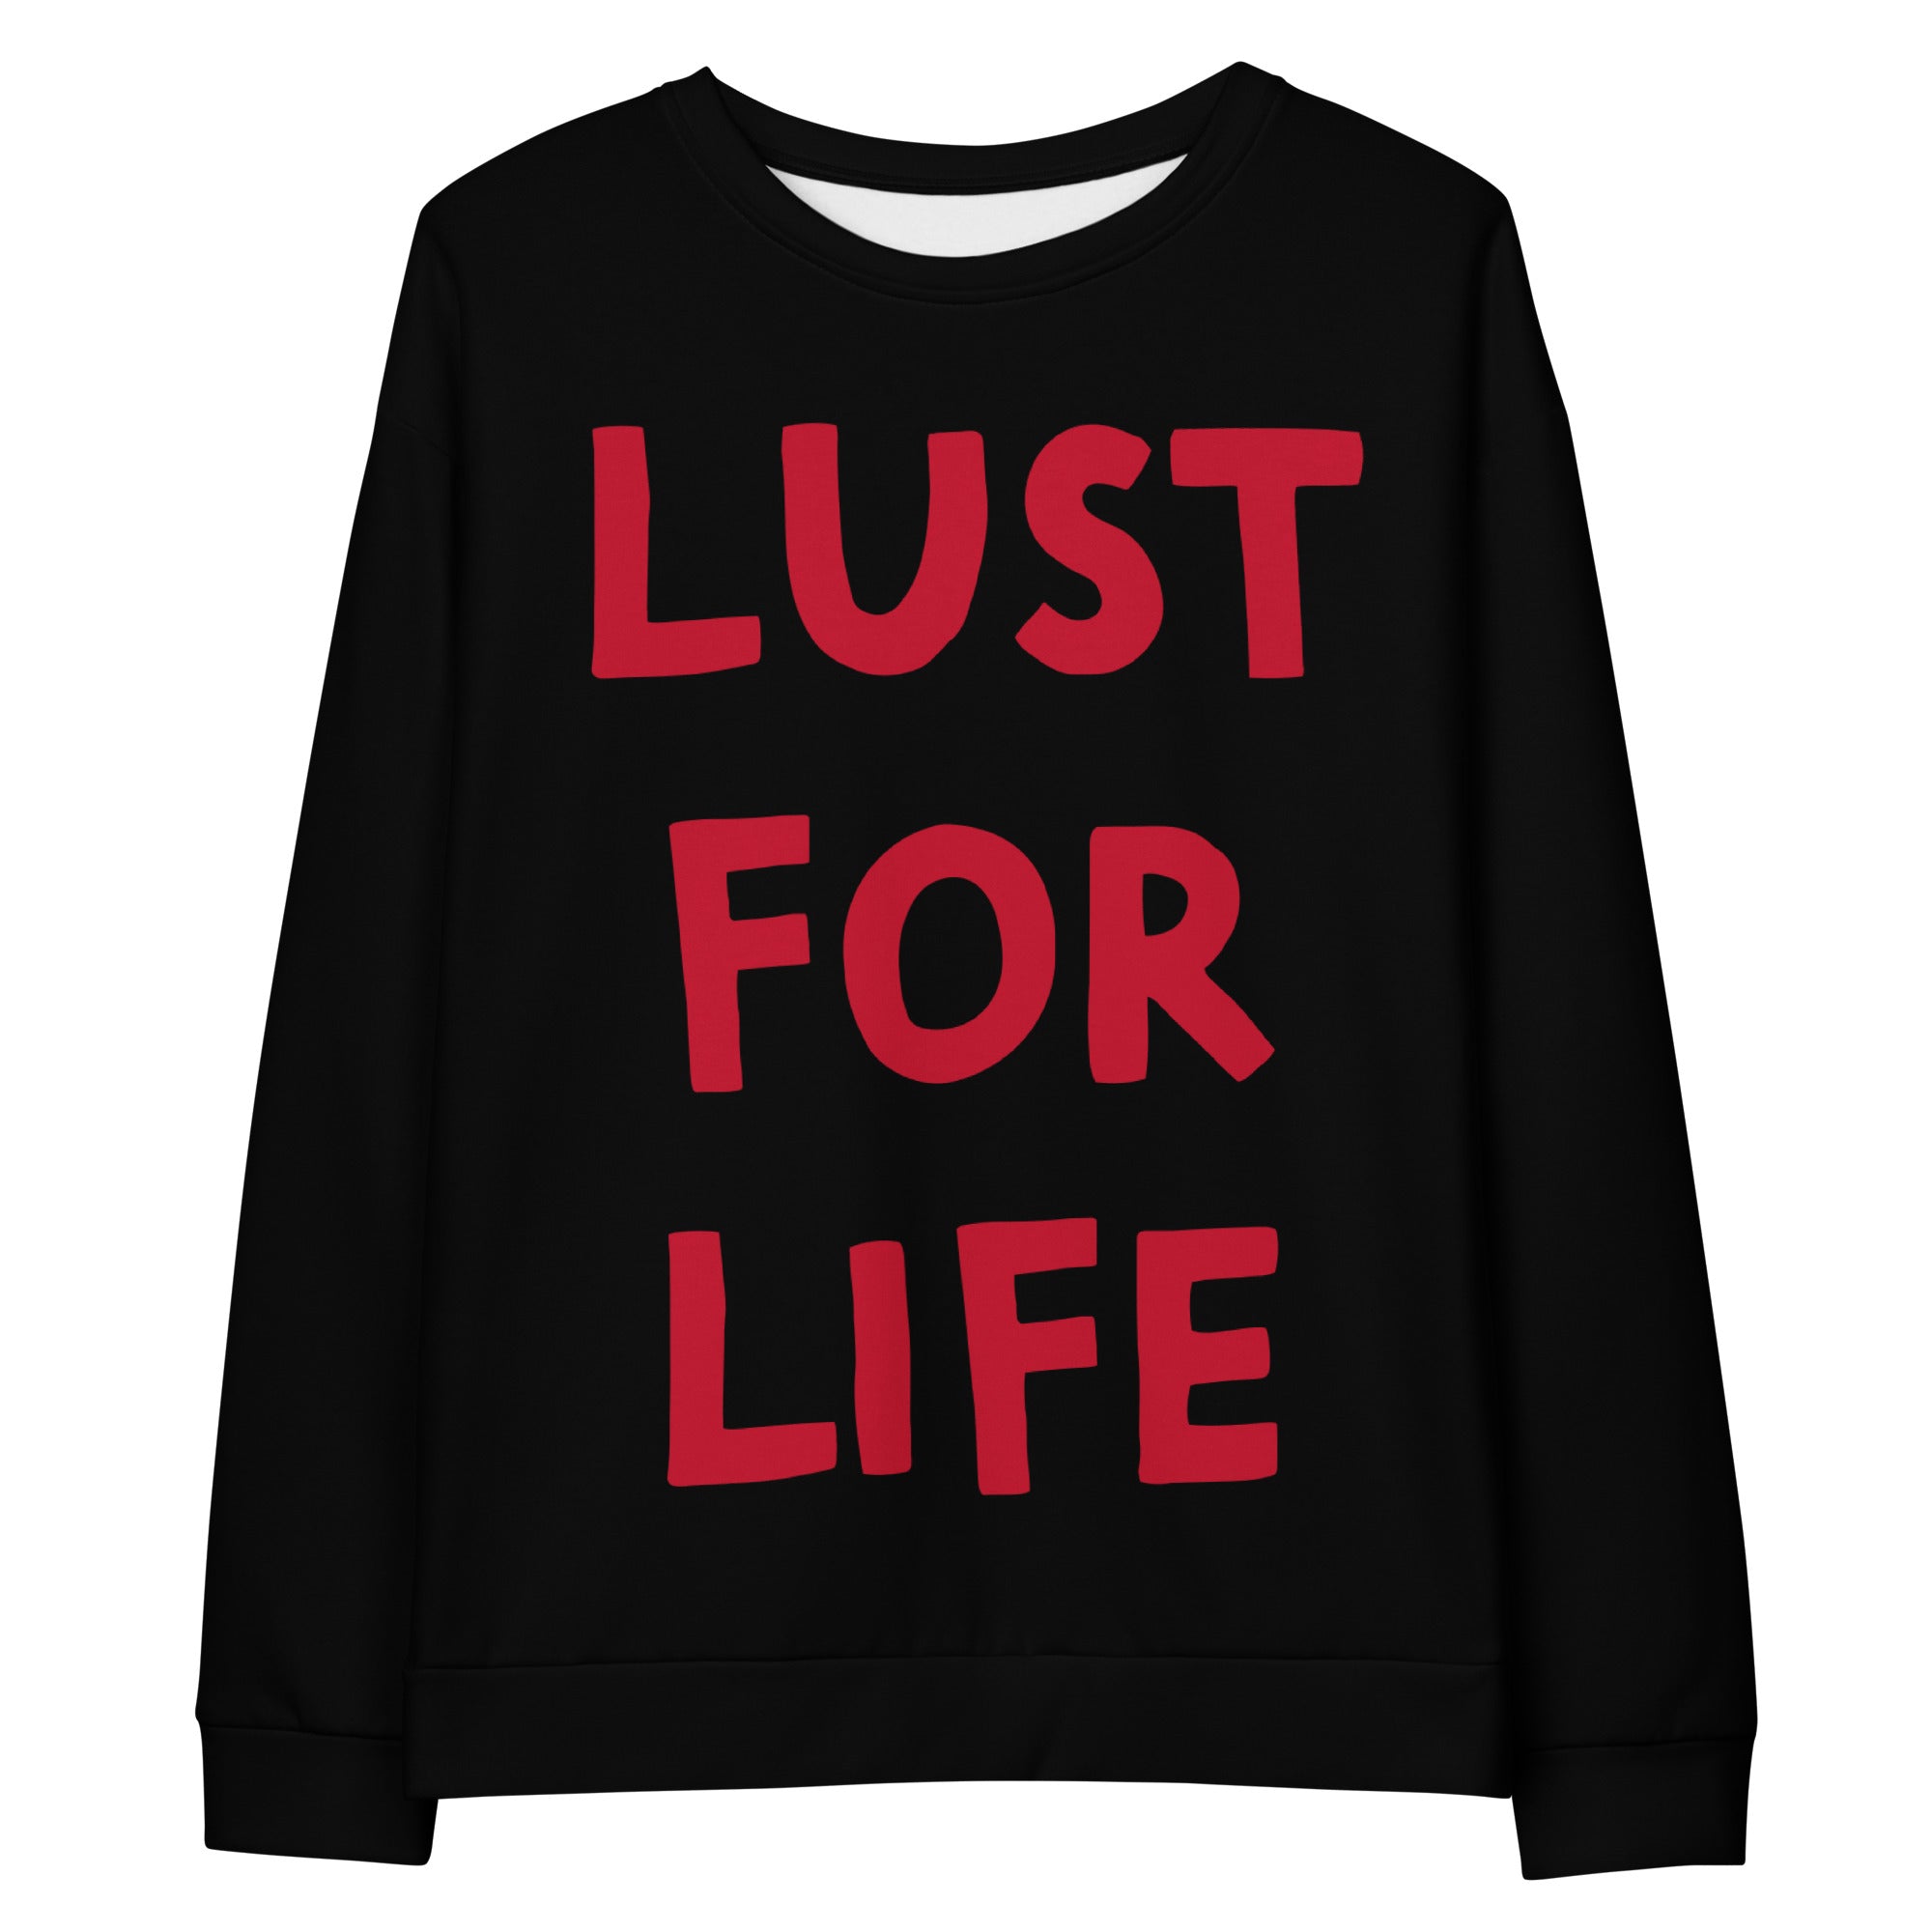 Lust For Life Maxi Typography Premium Printed Unisex Sweatshirt - inspired by Iggy Pop